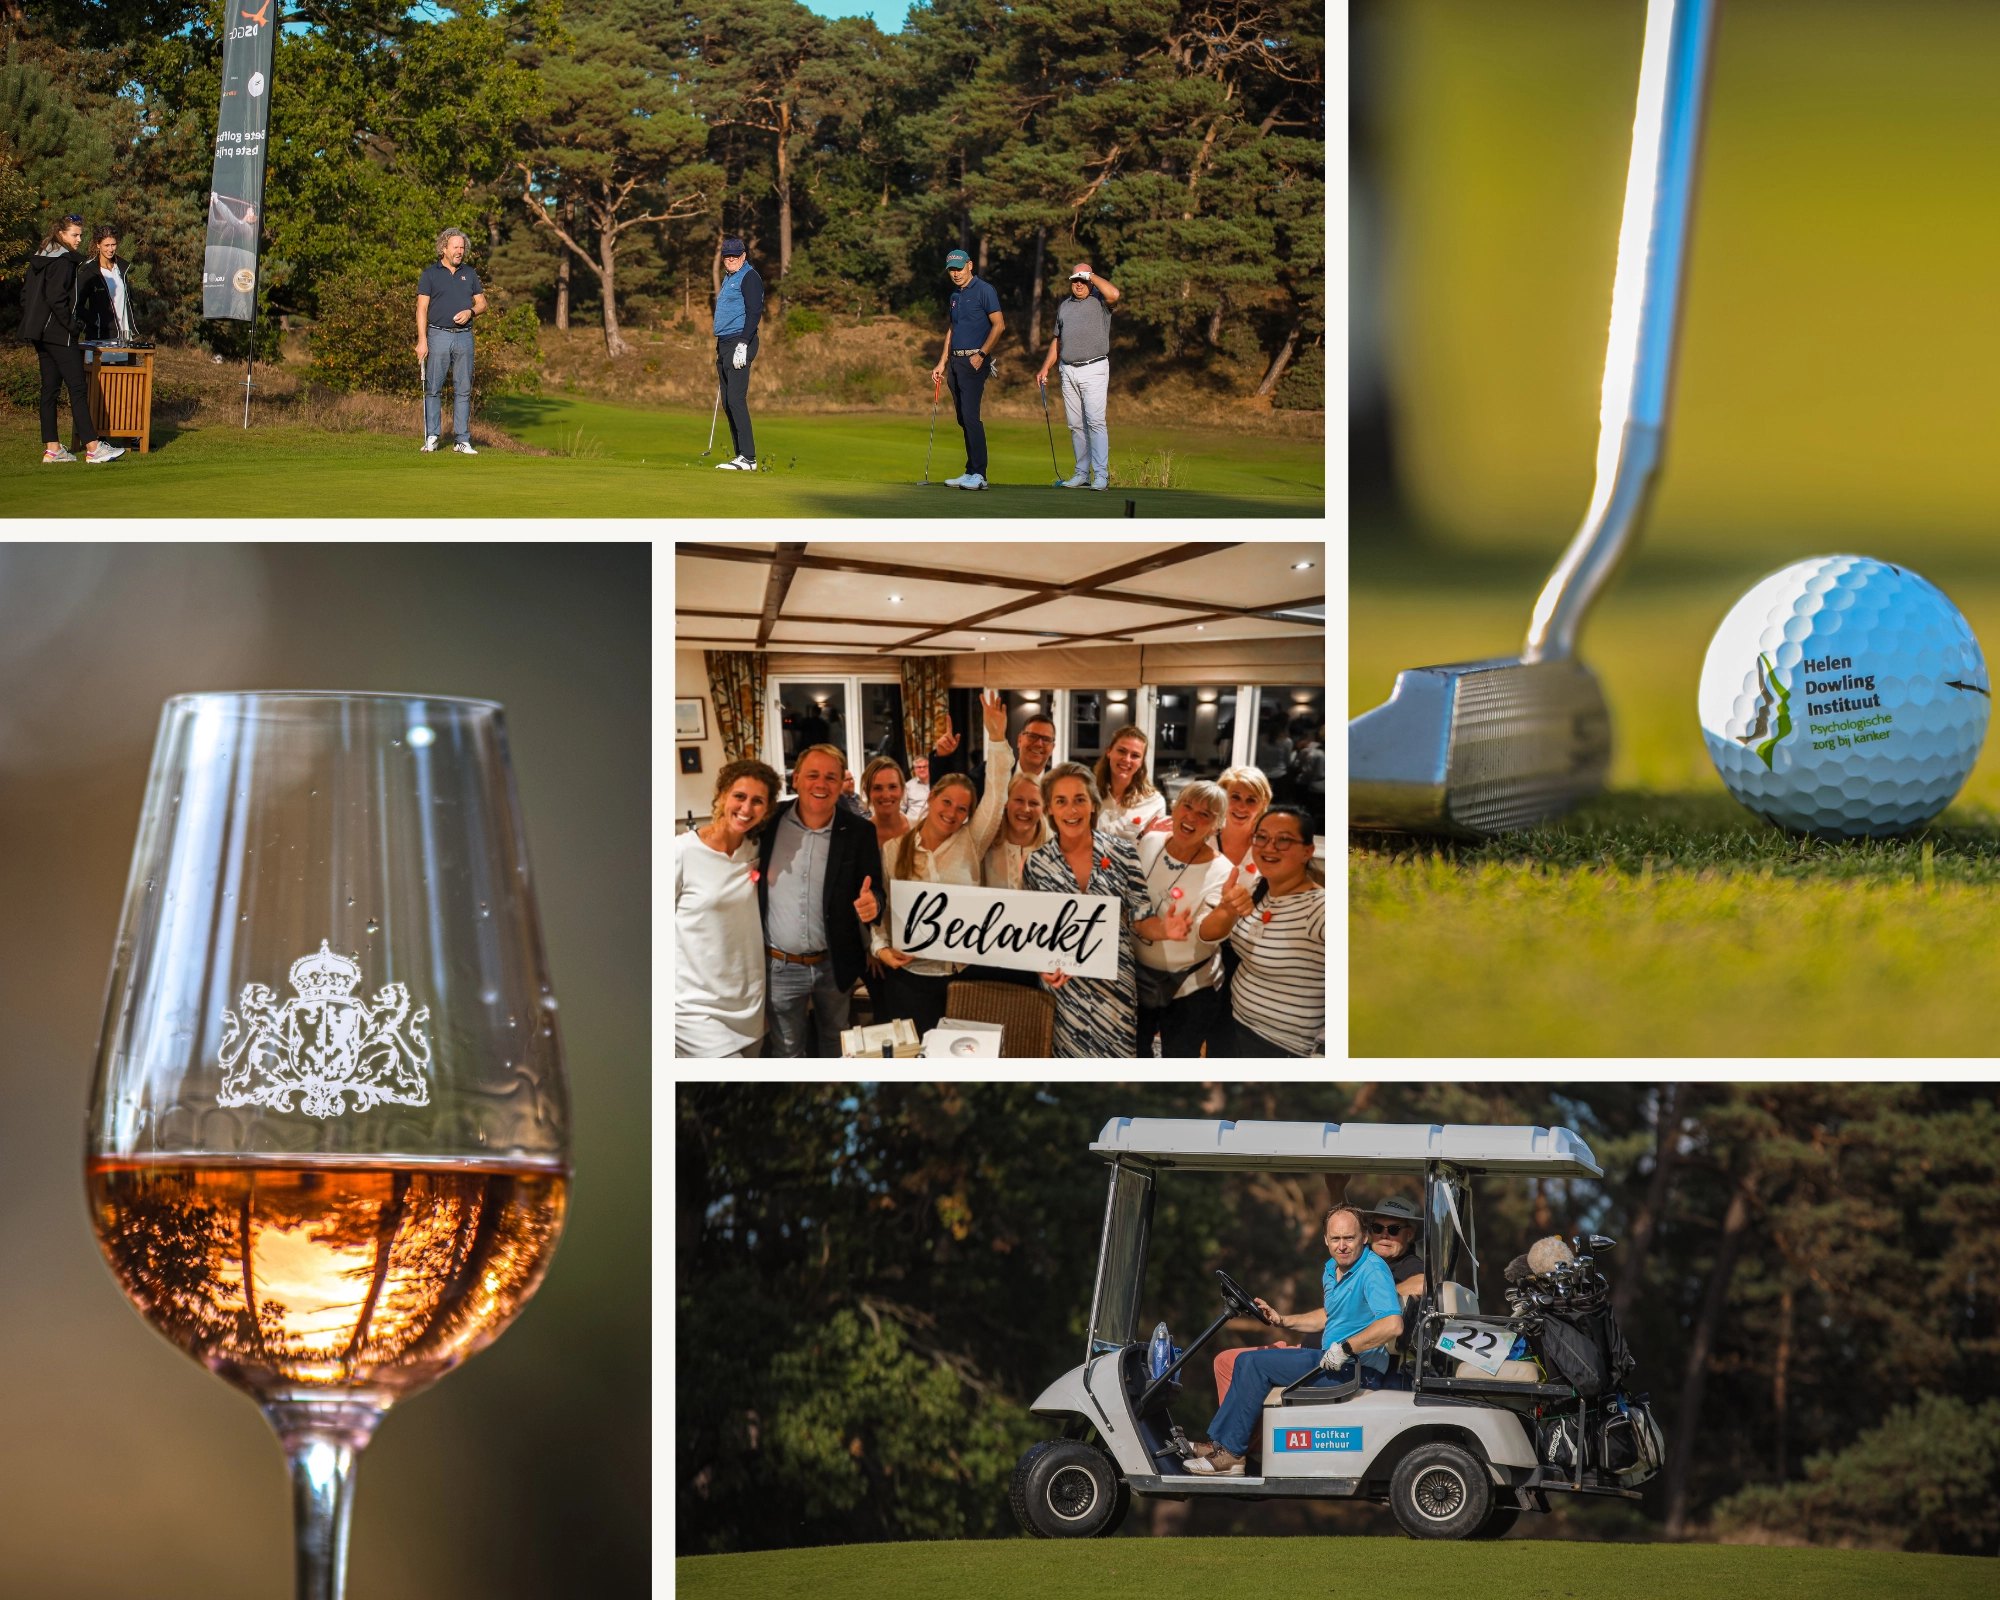 HDI Charity Golftoernooi brengt 82.130 euro op